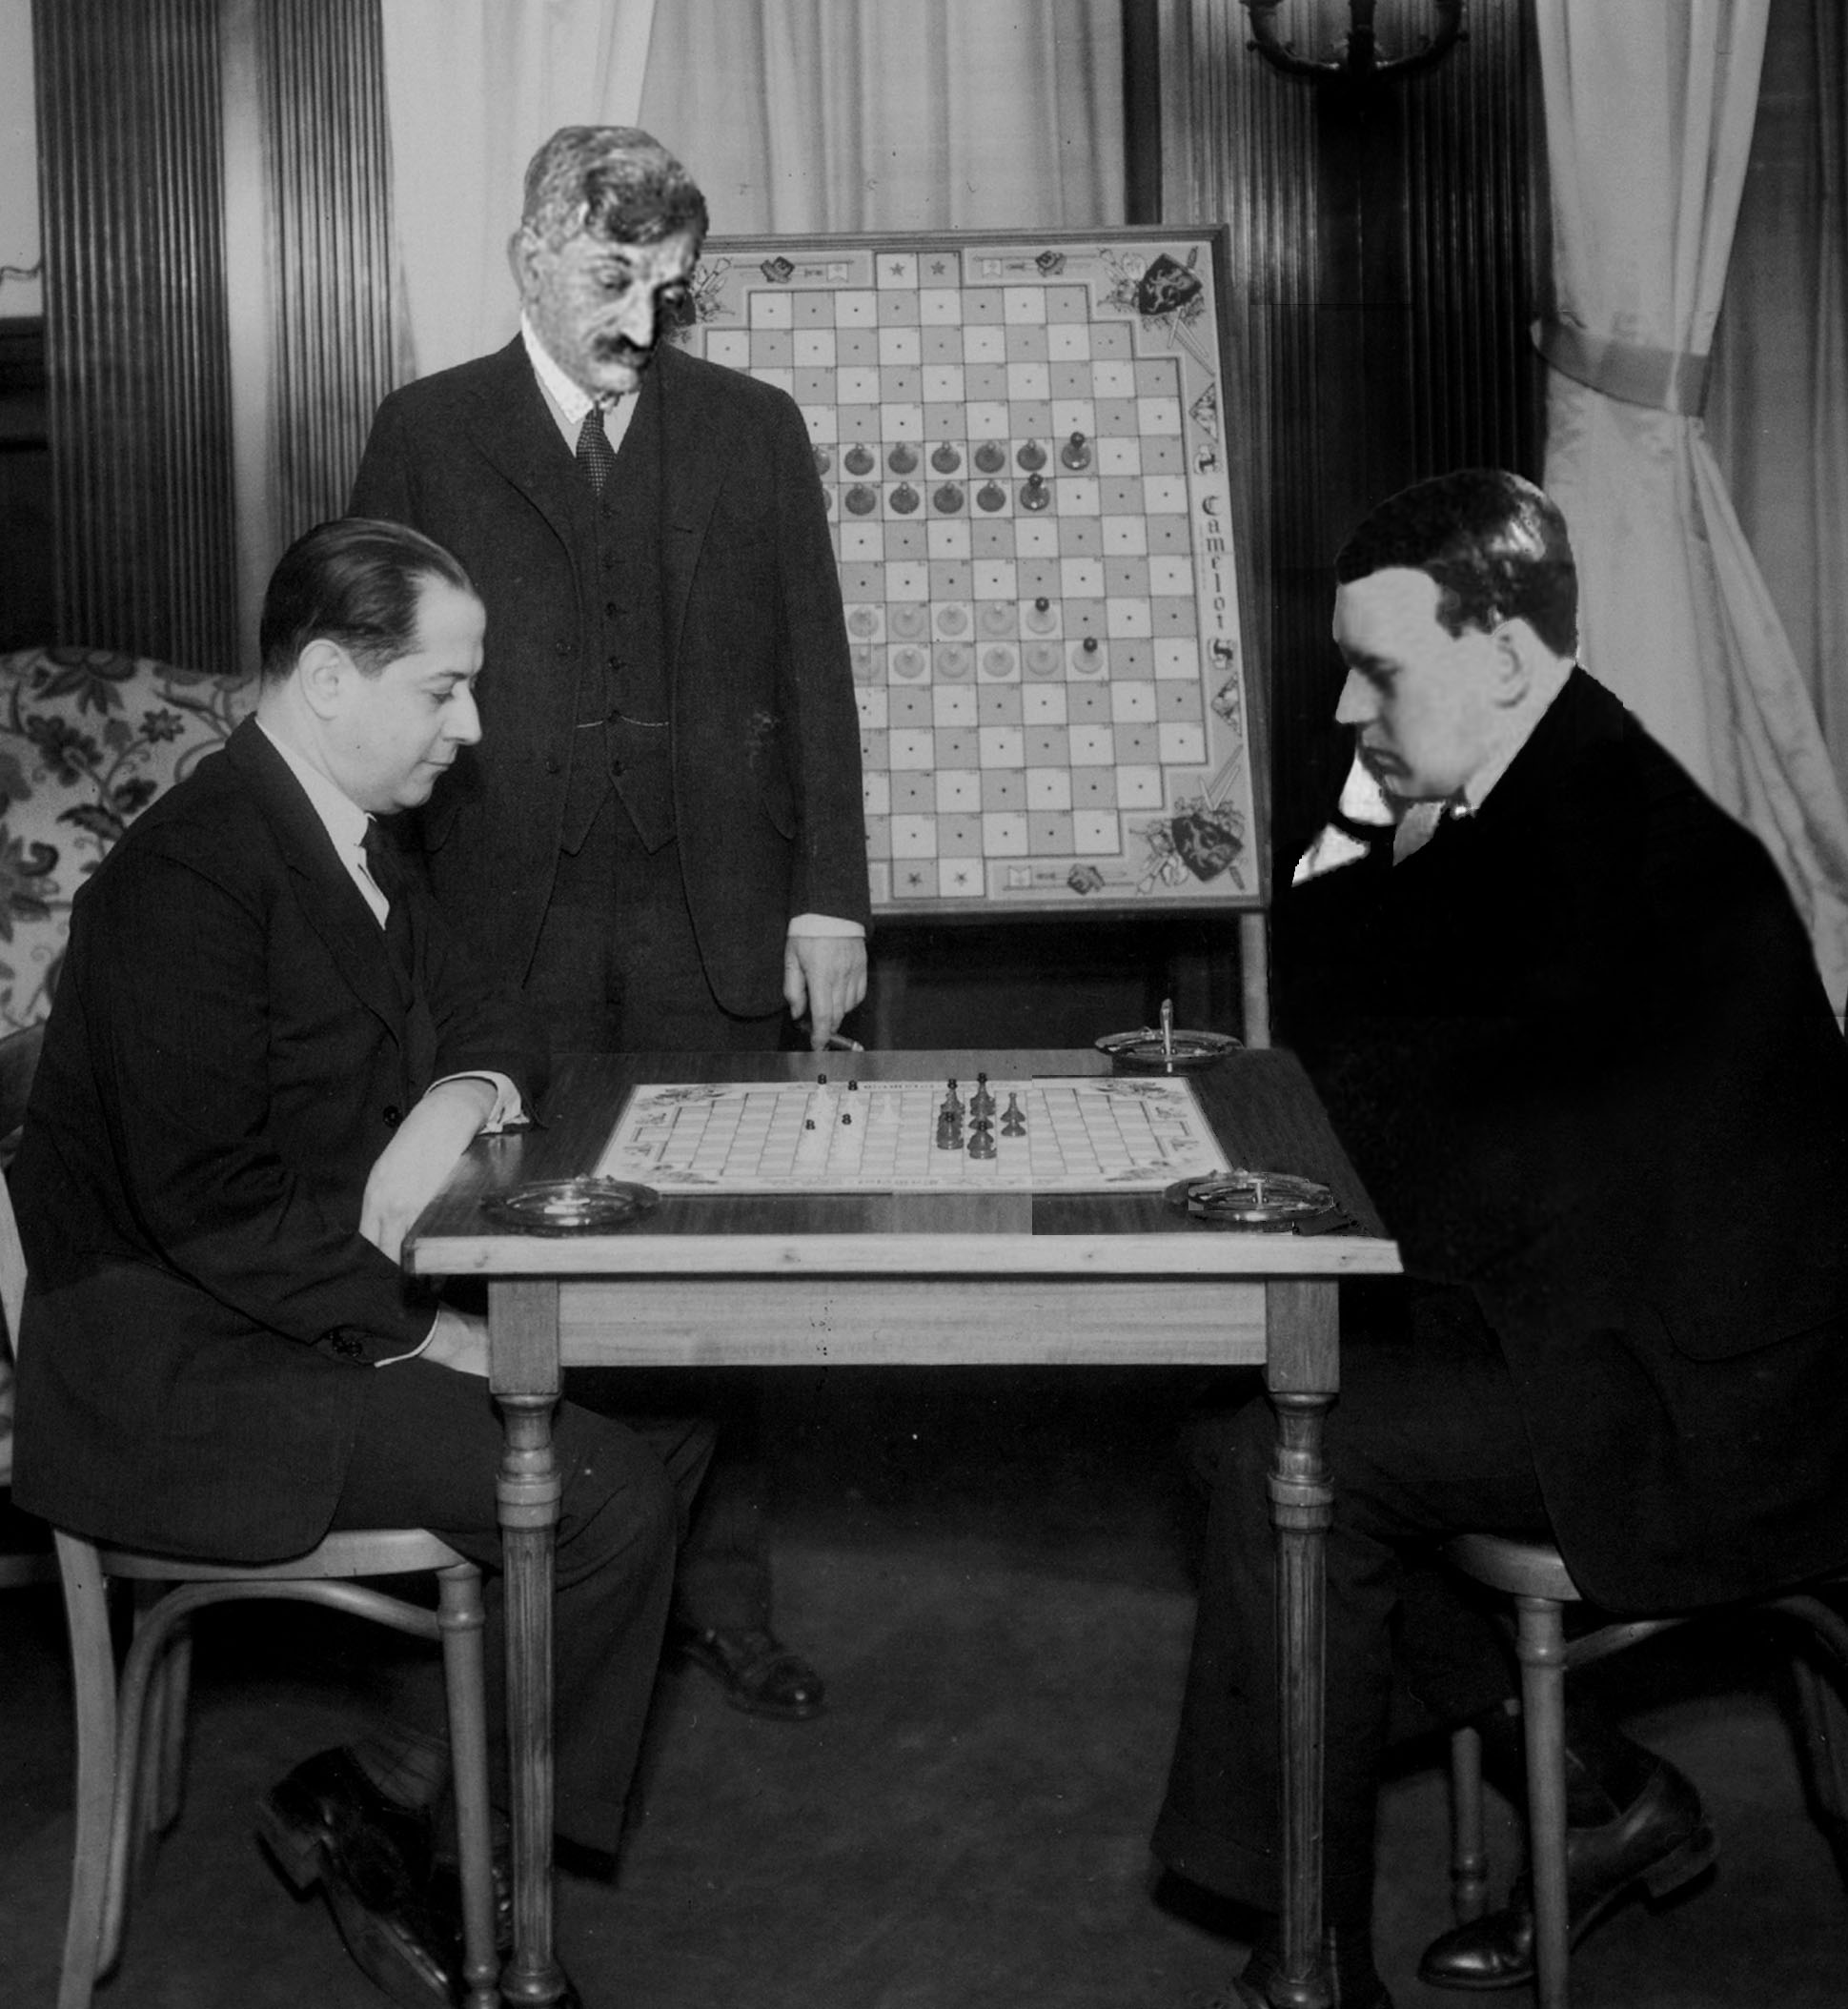 Alekhine vs Capablanca  World Chess Championship 1927 - Chess